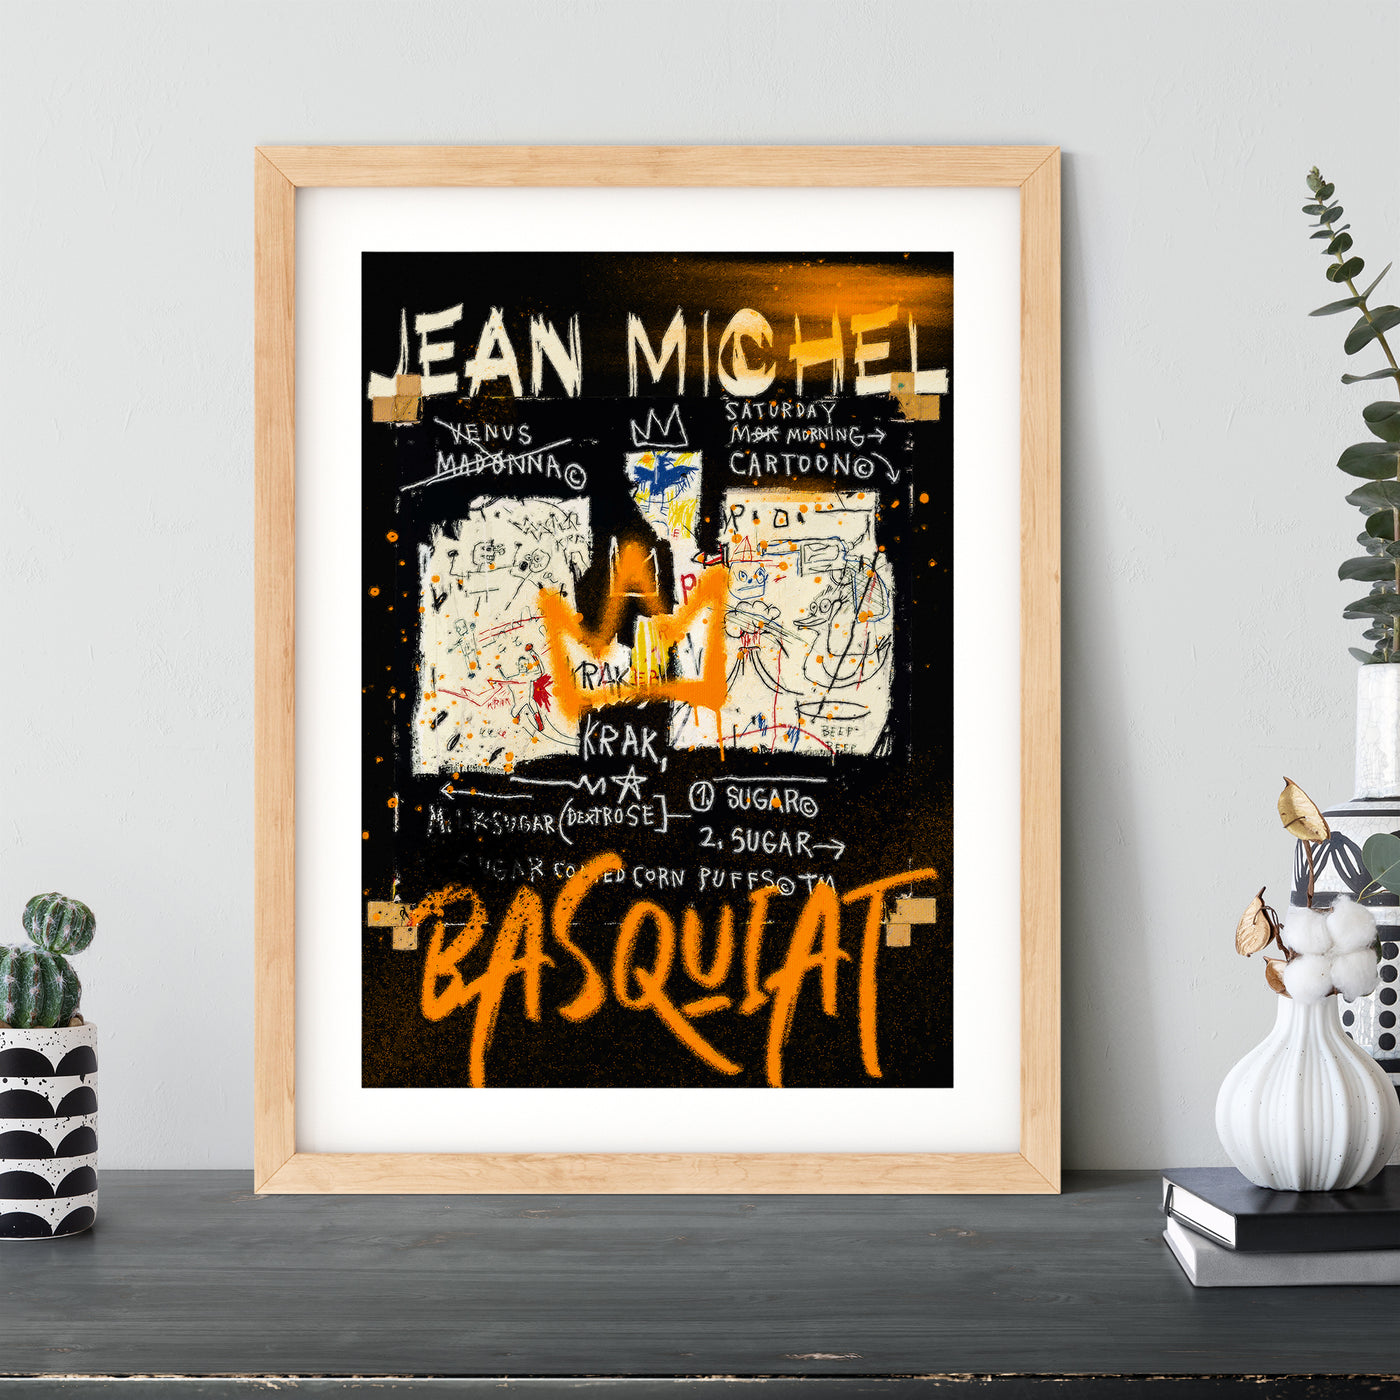 Jean Michel Basquiat Pop Art #2